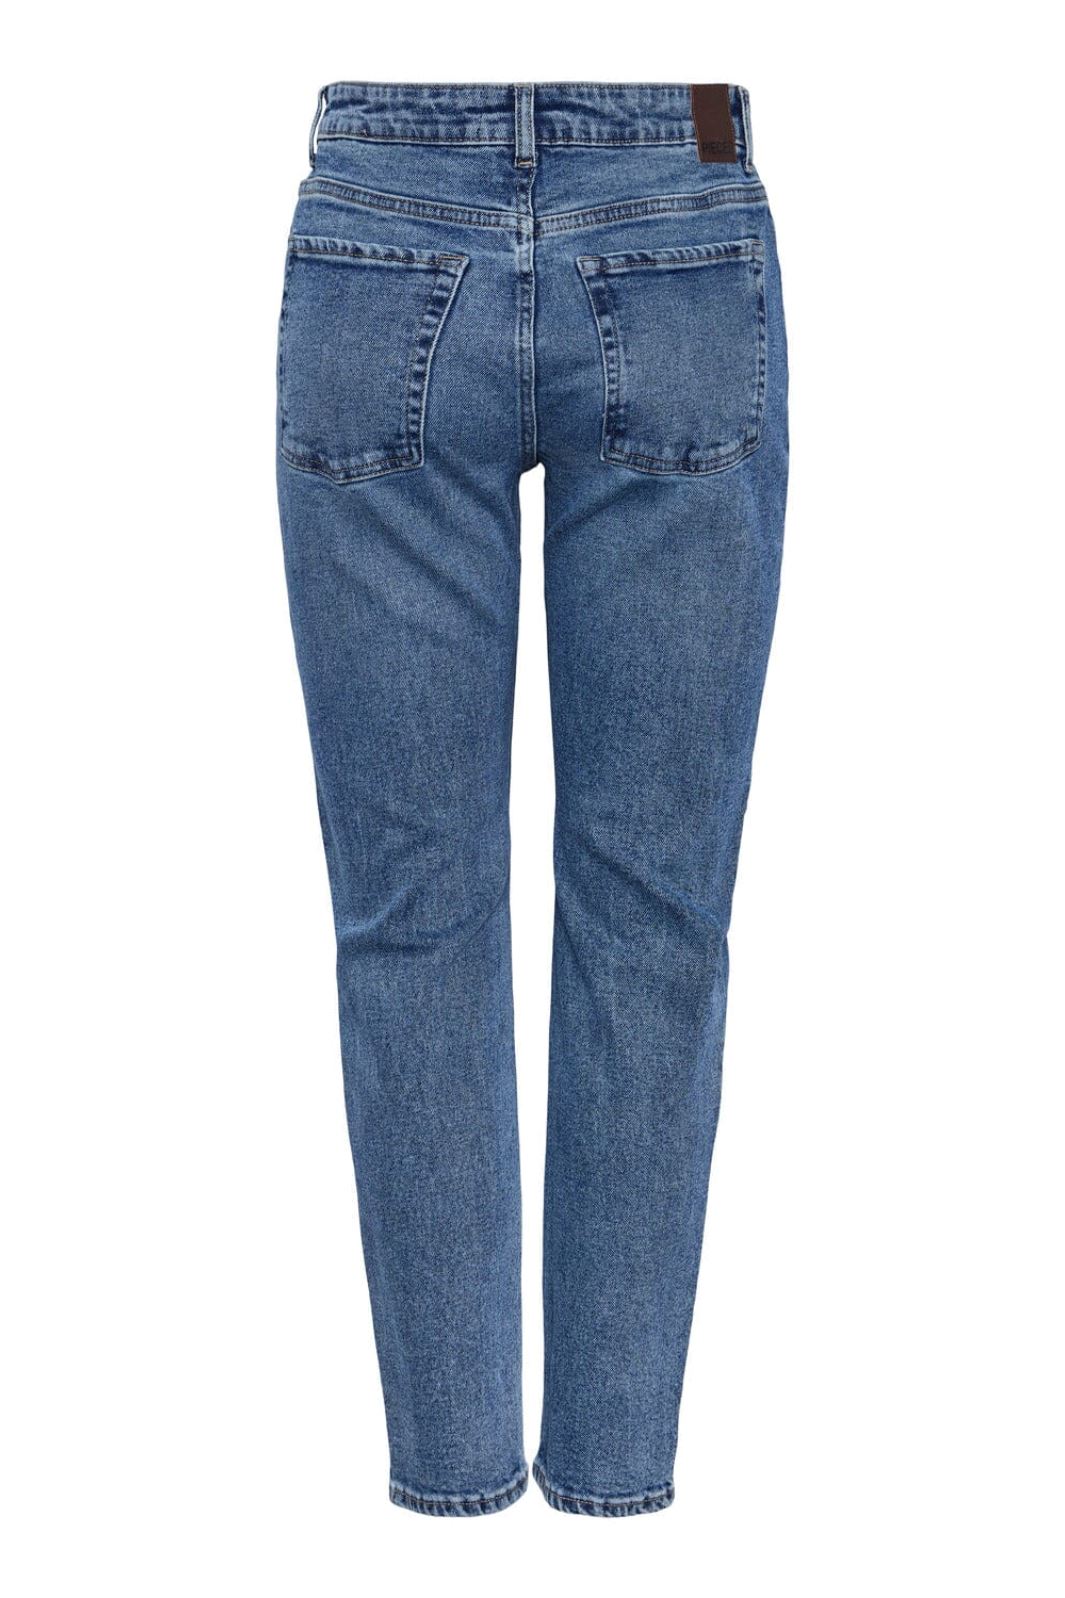 Pieces - Pcbella Tap Jeans Mb406 - 4437866 Medium Blue Denim Jeans 